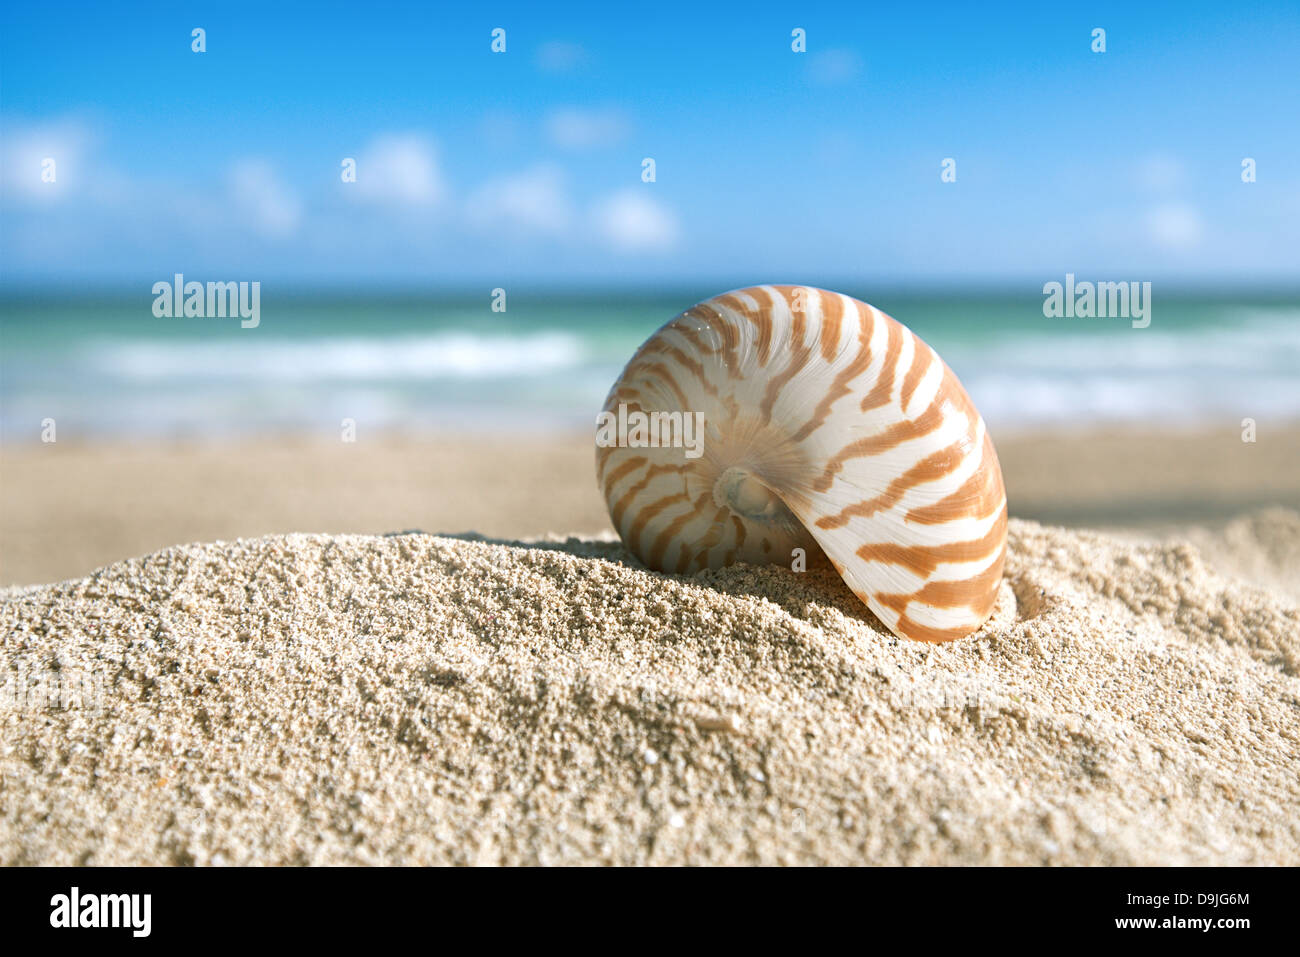 https://c8.alamy.com/comp/D9JG6M/small-nautilus-shell-with-ocean-beach-and-seascape-shallow-dof-D9JG6M.jpg